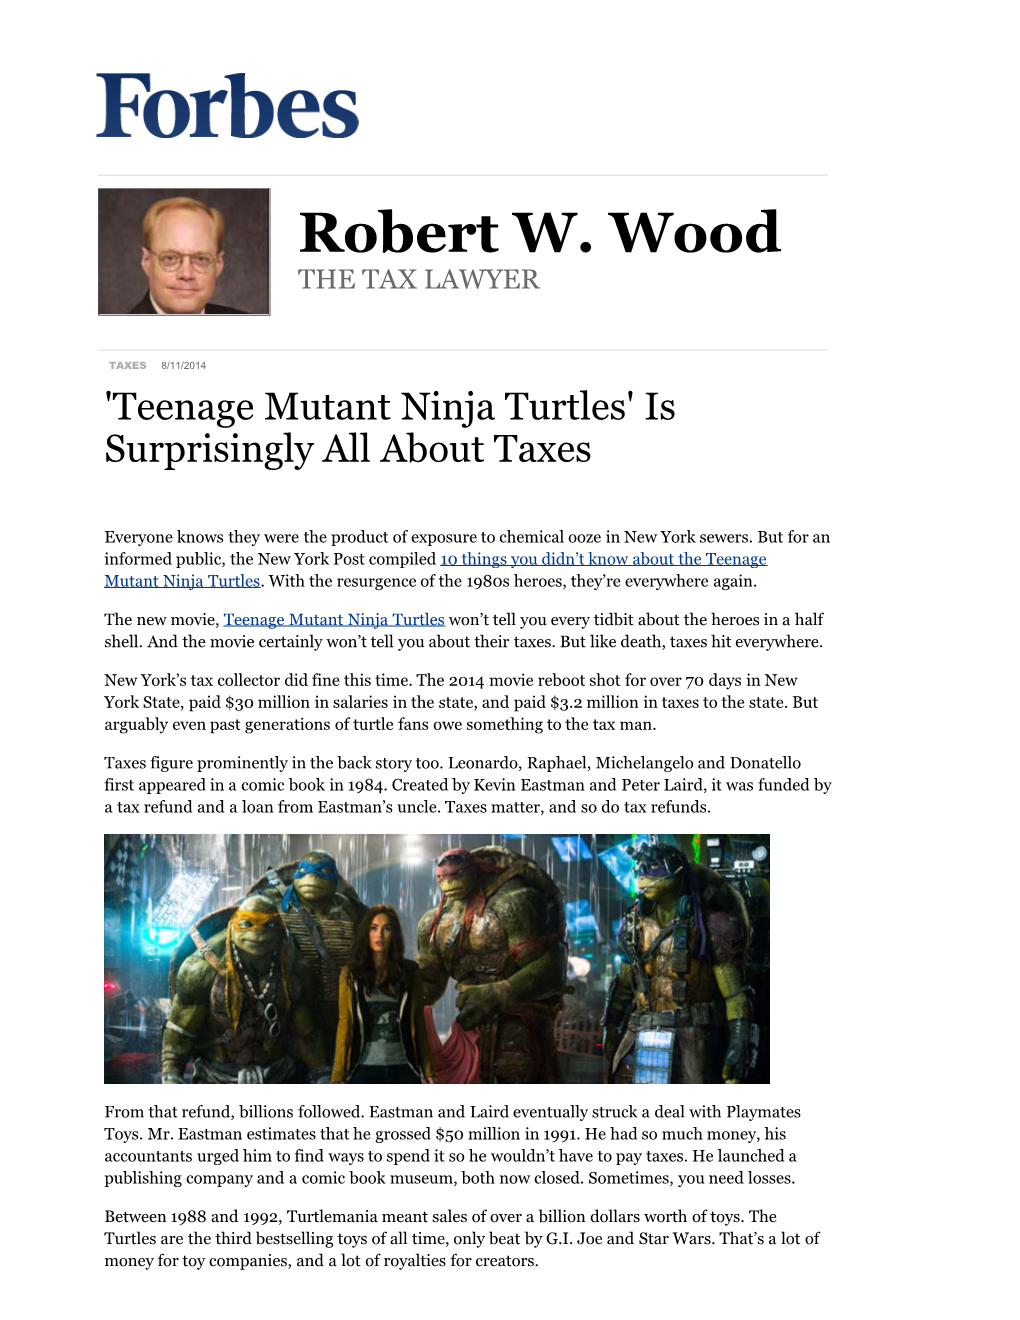 'Teenage Mutant Ninja Turtles' Is Surprisingly All About Taxes